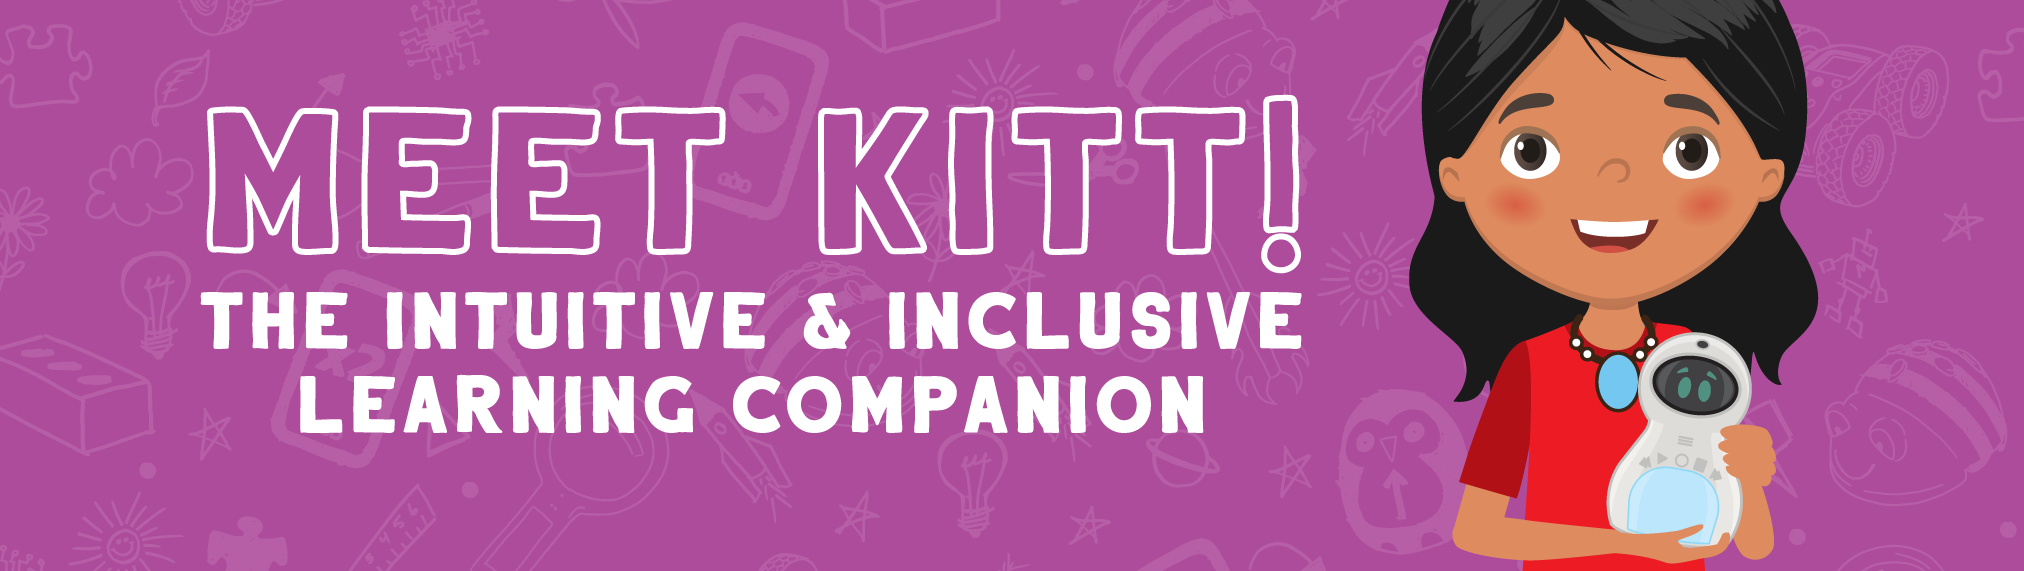 MEET KITT! THE INTUITIVE & INCLUSIVE LEARNING COMPANION.